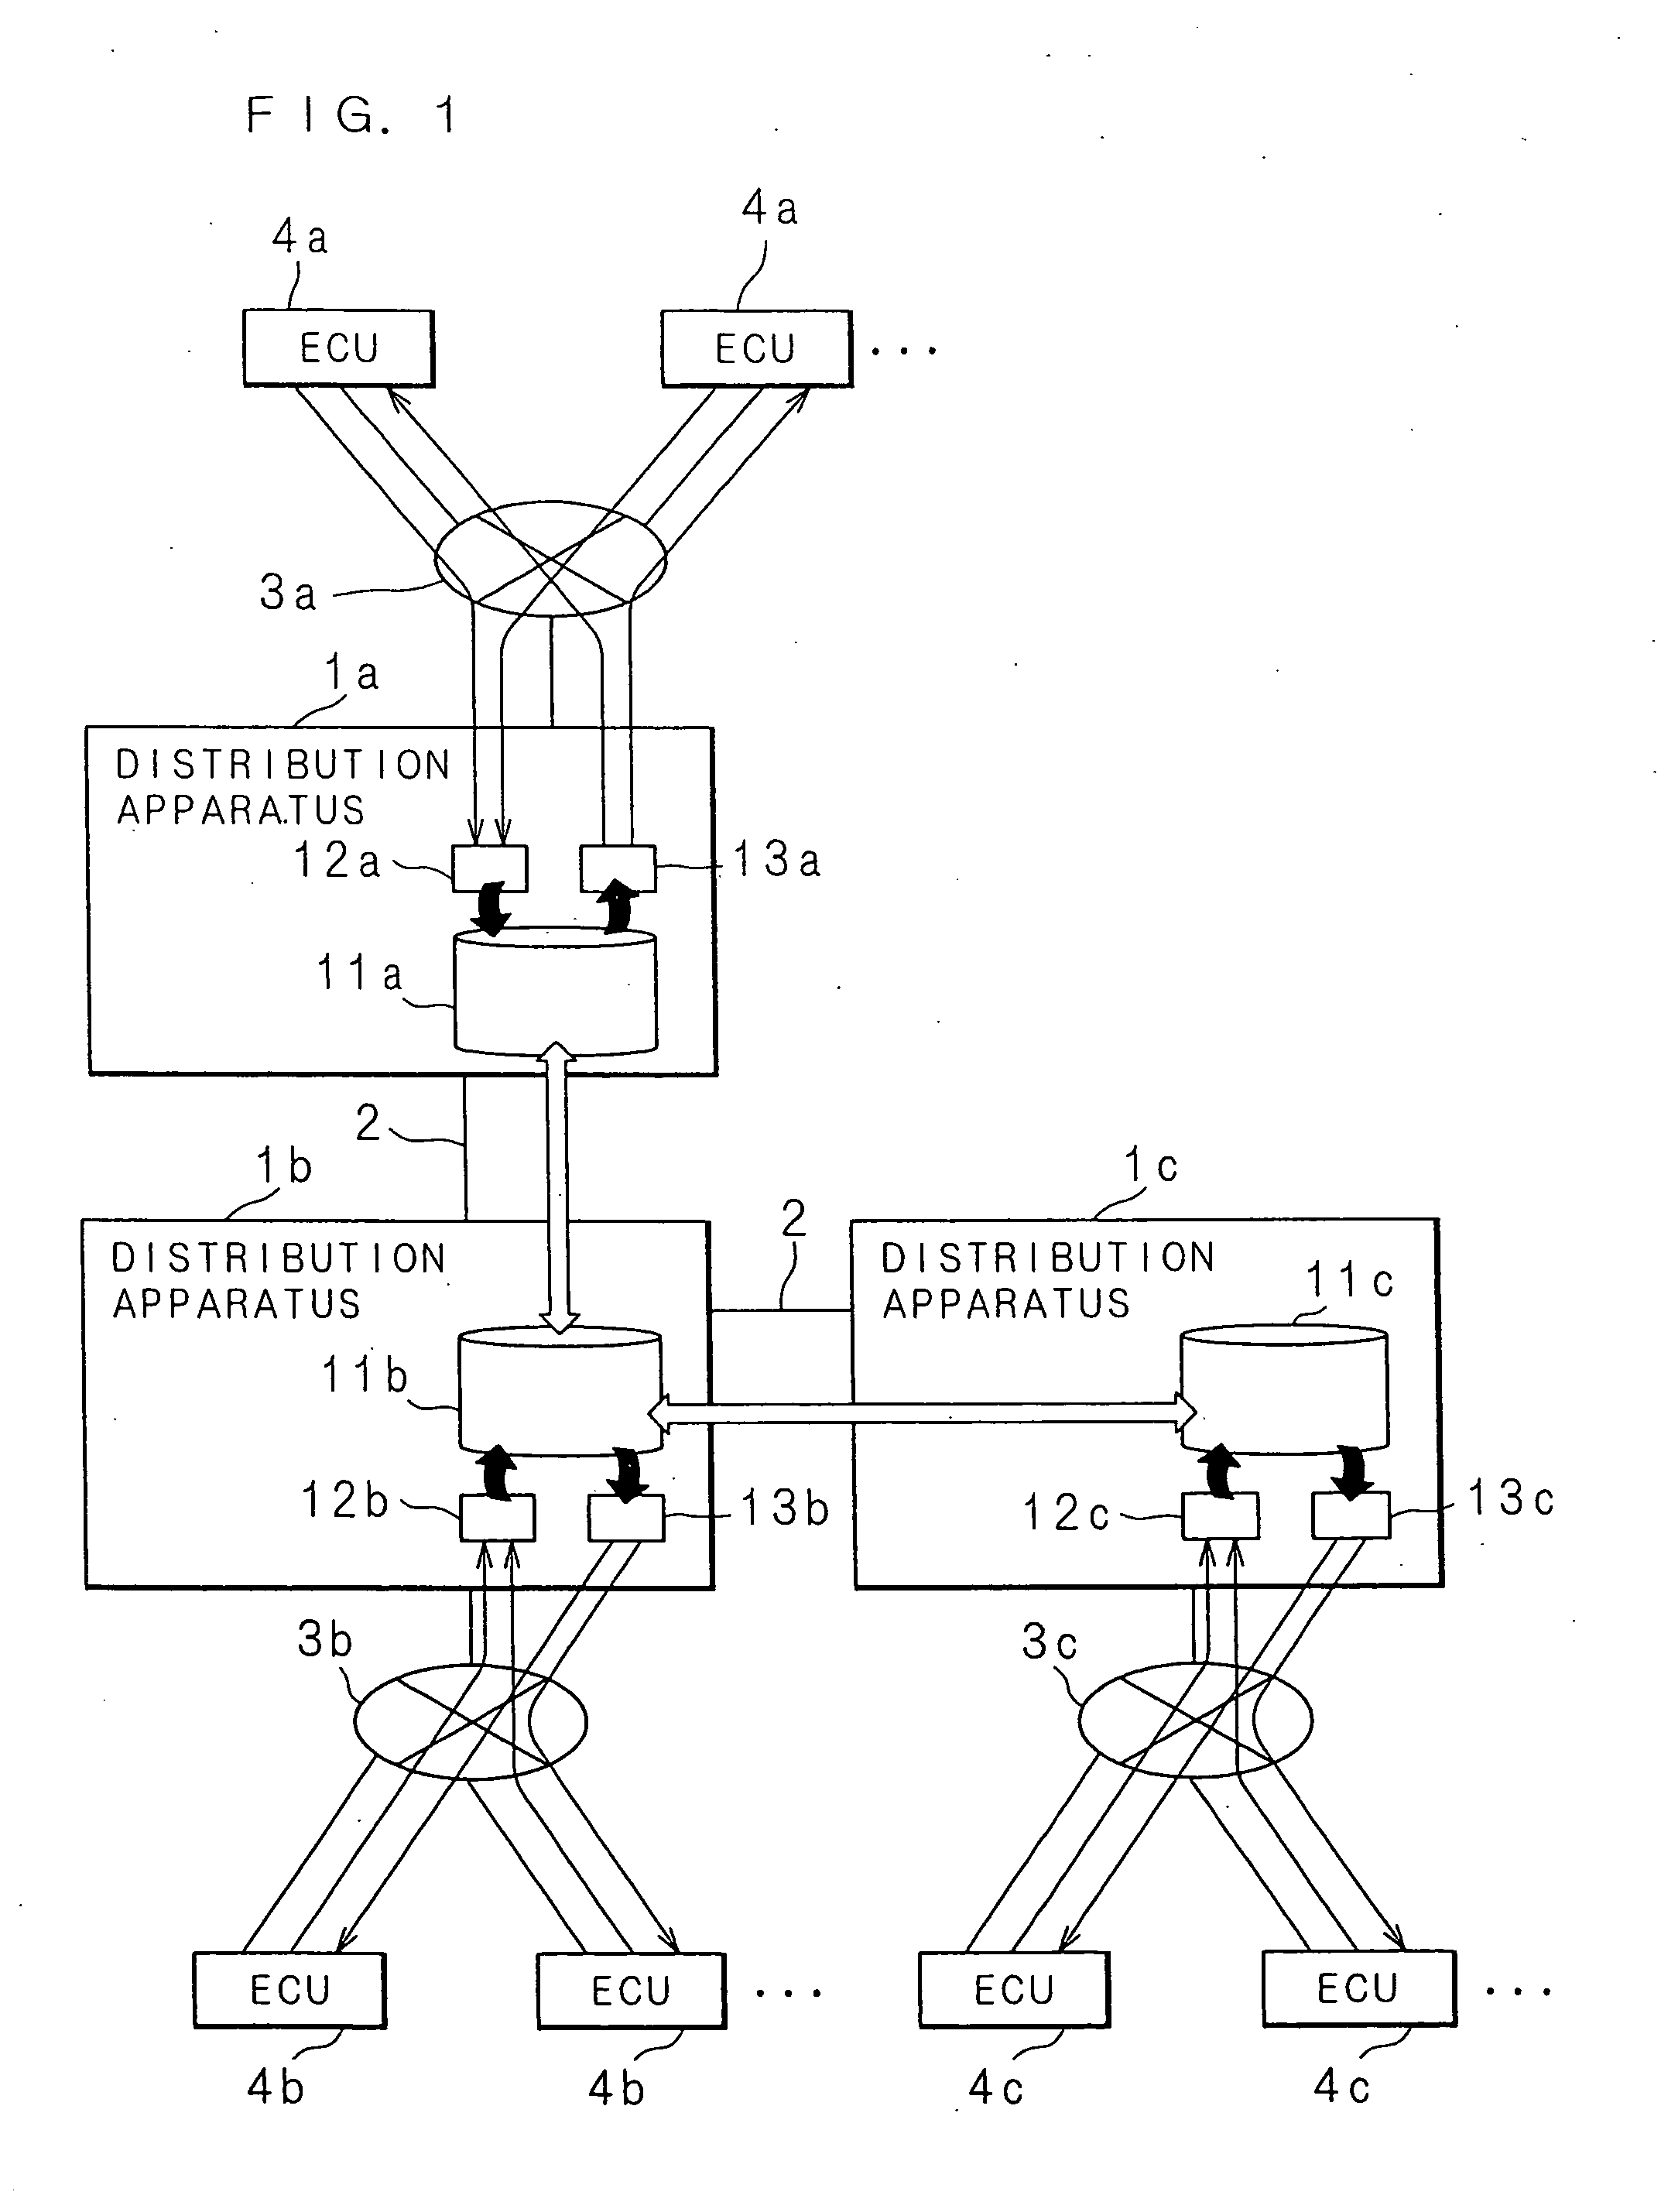 Distribution apparatus, communication system and comunication method